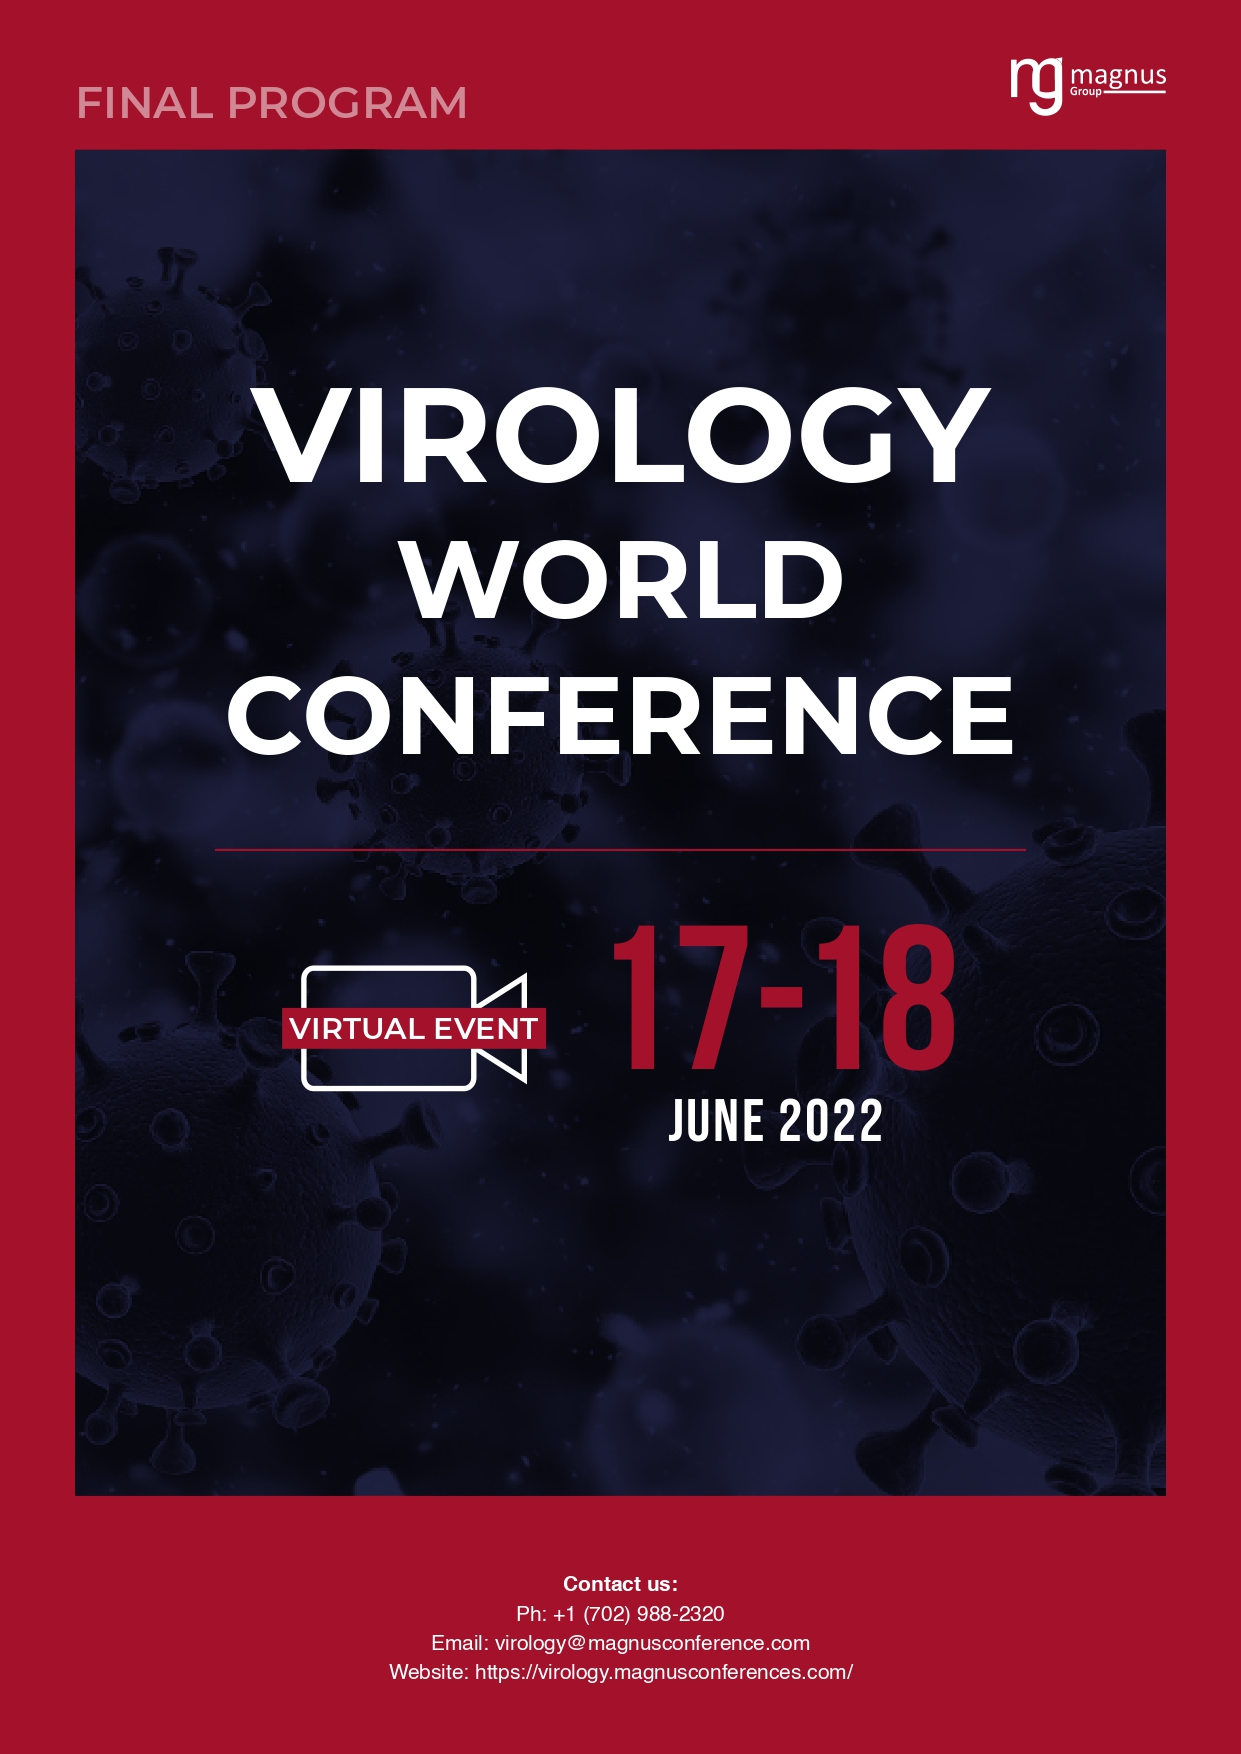 Virology World Conference | Virtual Event Program